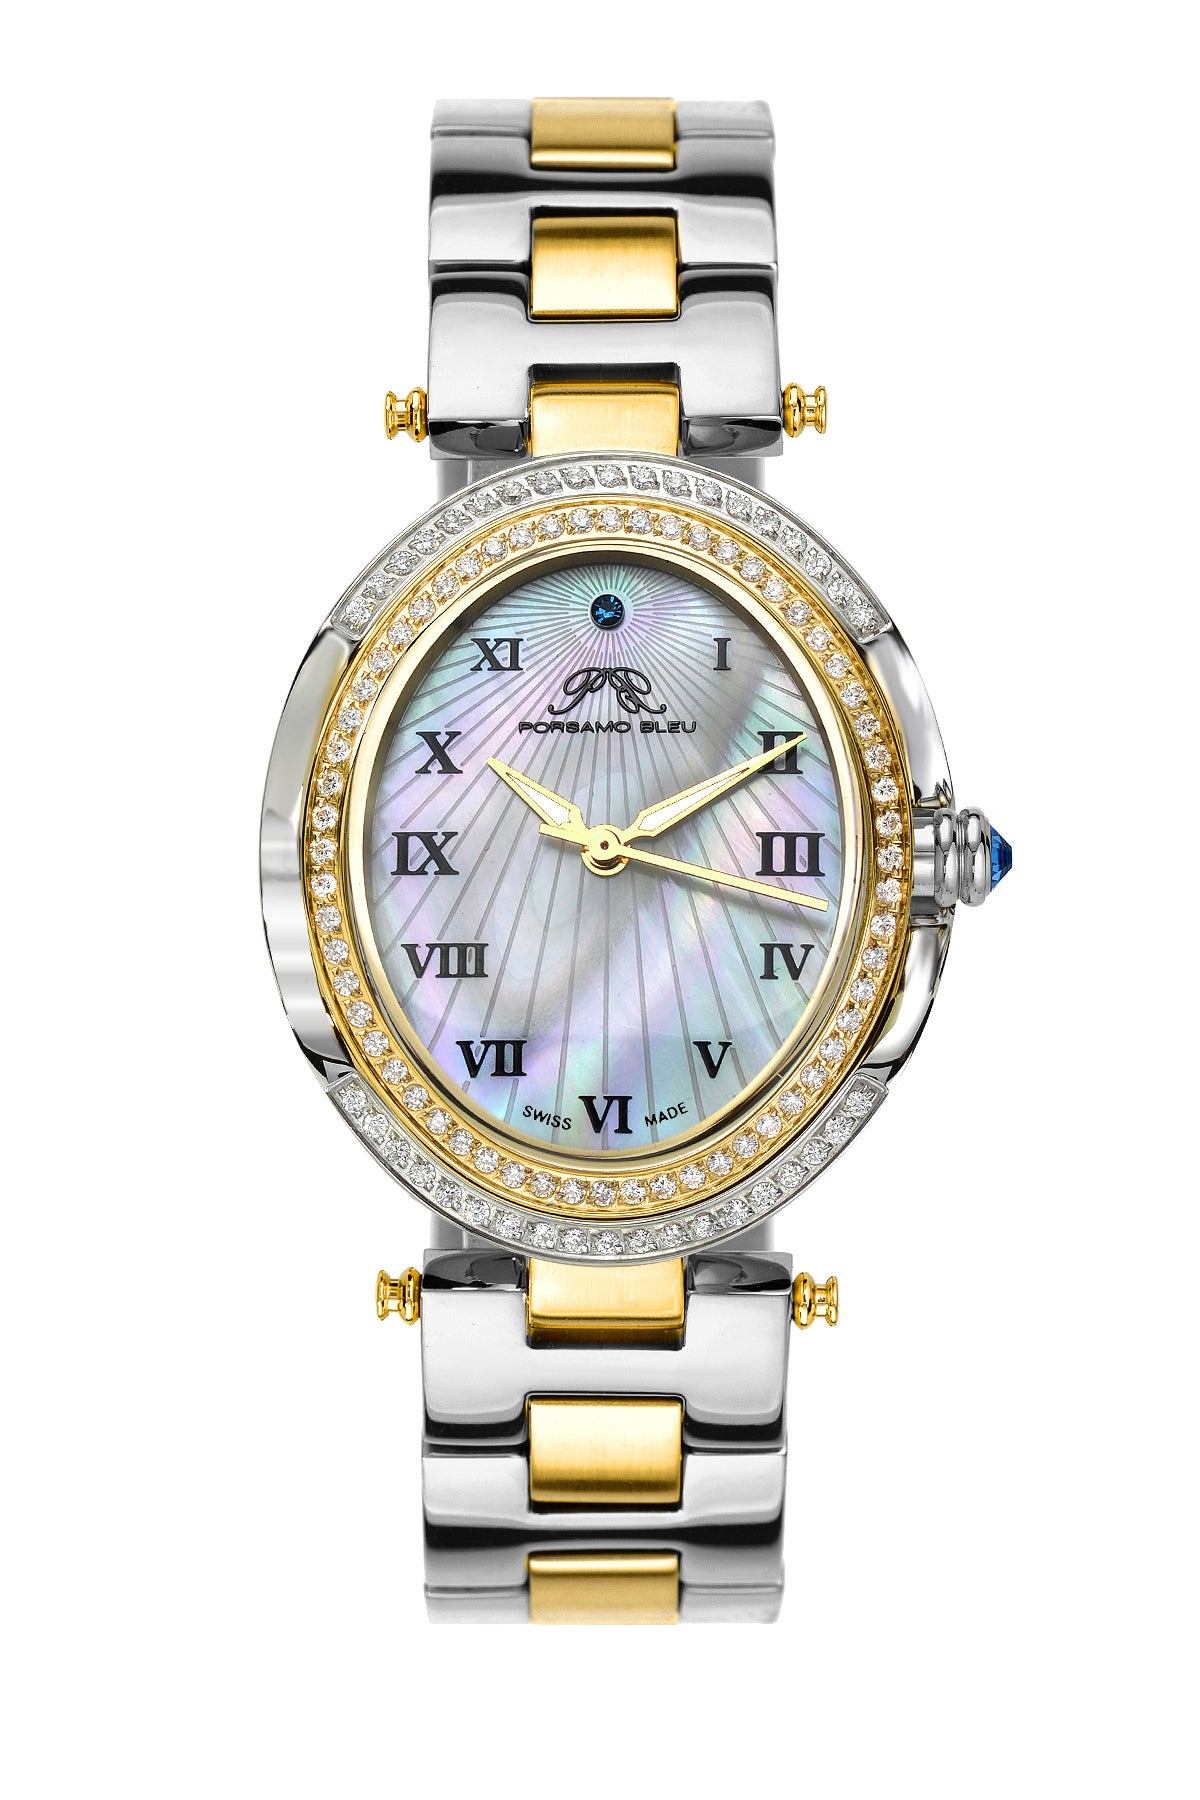 Porsamo Bleu South Sea Oval Crystal Luxury Women's Stainless Steel Watch, Silver, Gold 106FSSO